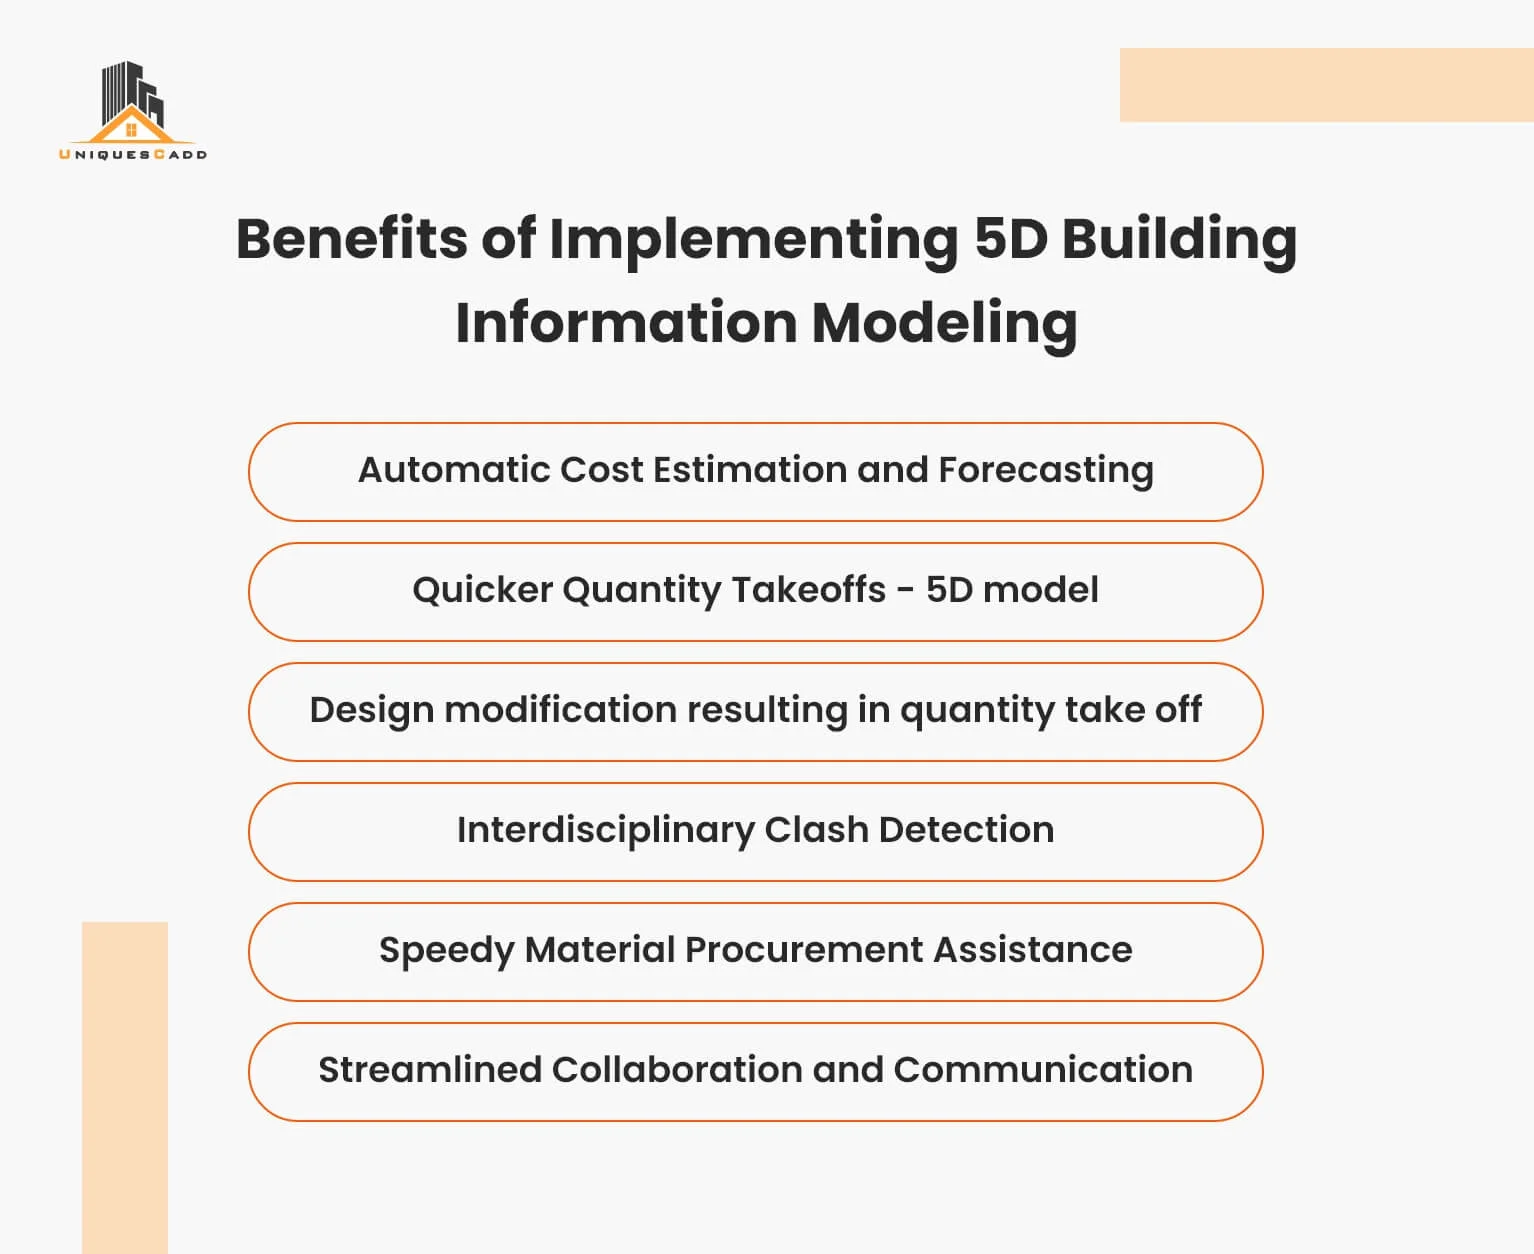 Benefits of Implementing 5D Building Information Modeling